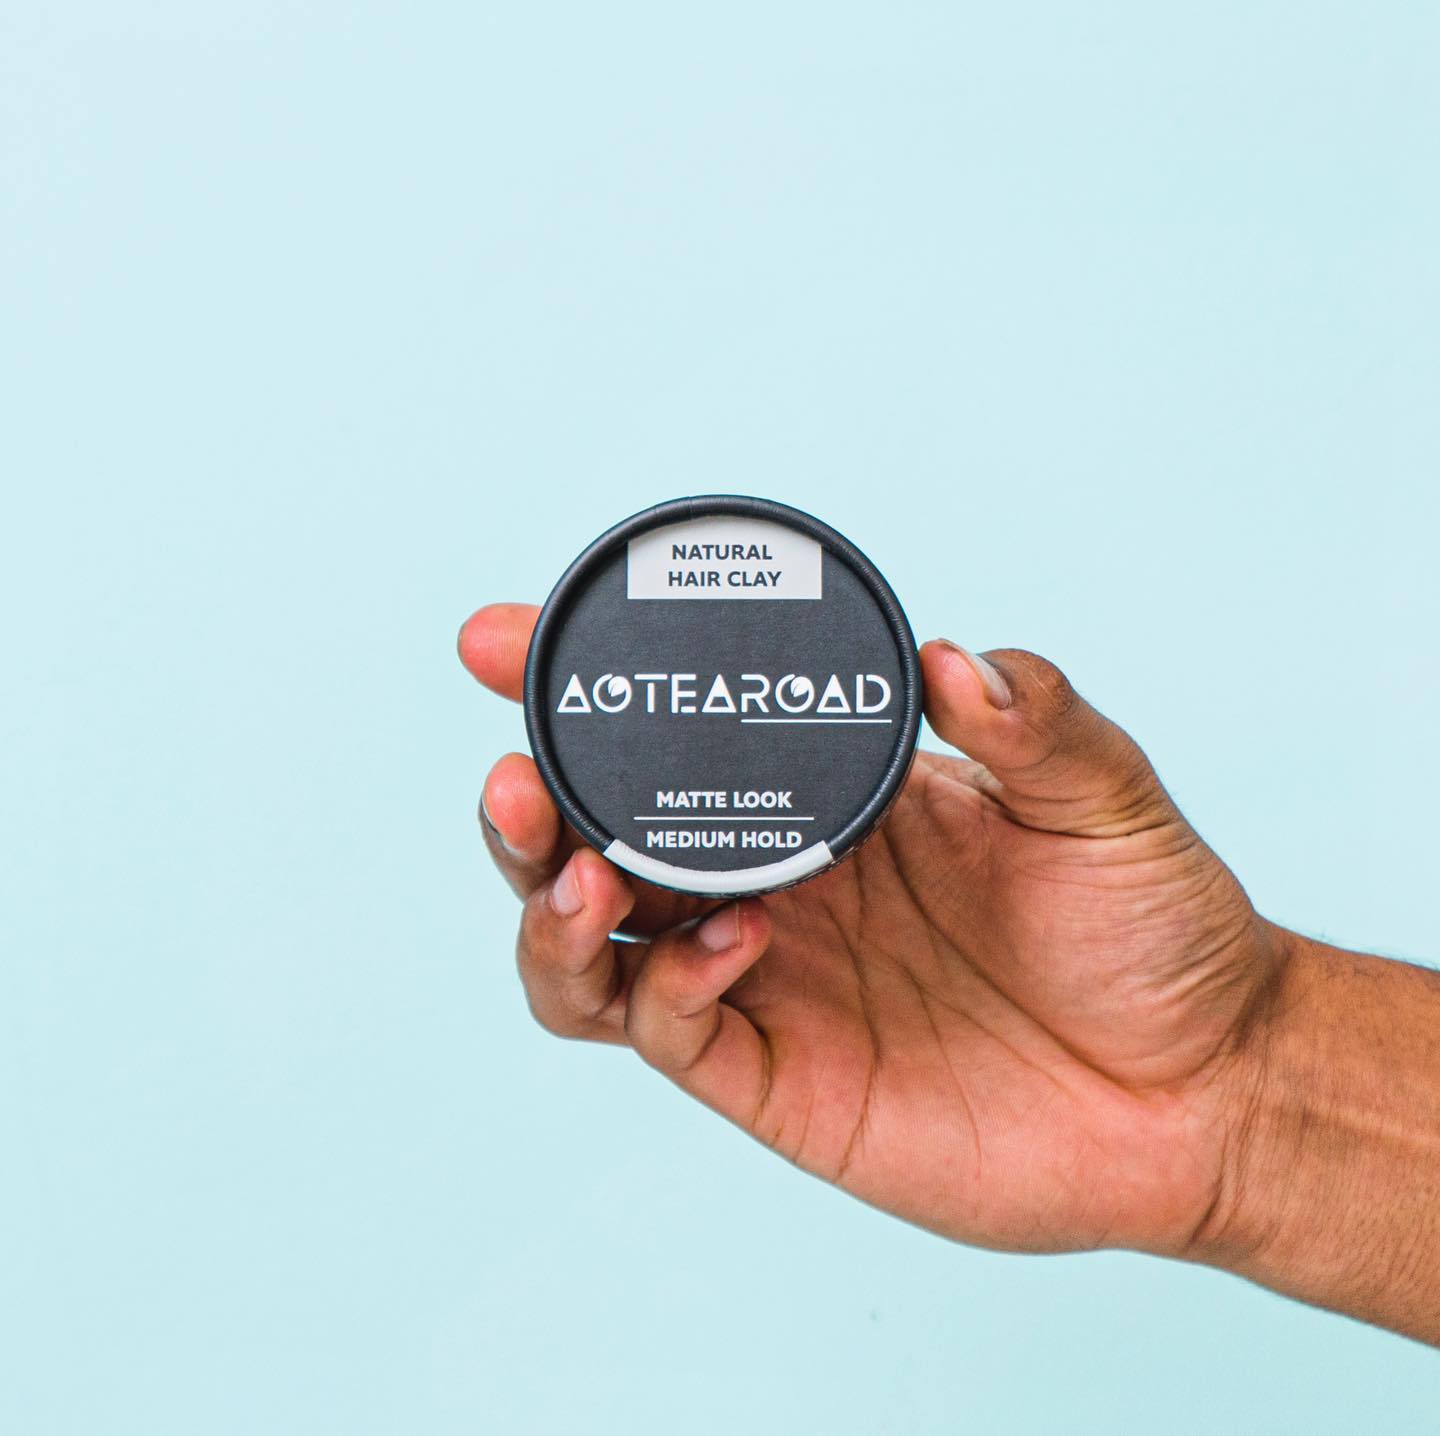 Aotearoad Medium Hold Hair Clay-The Living Co.